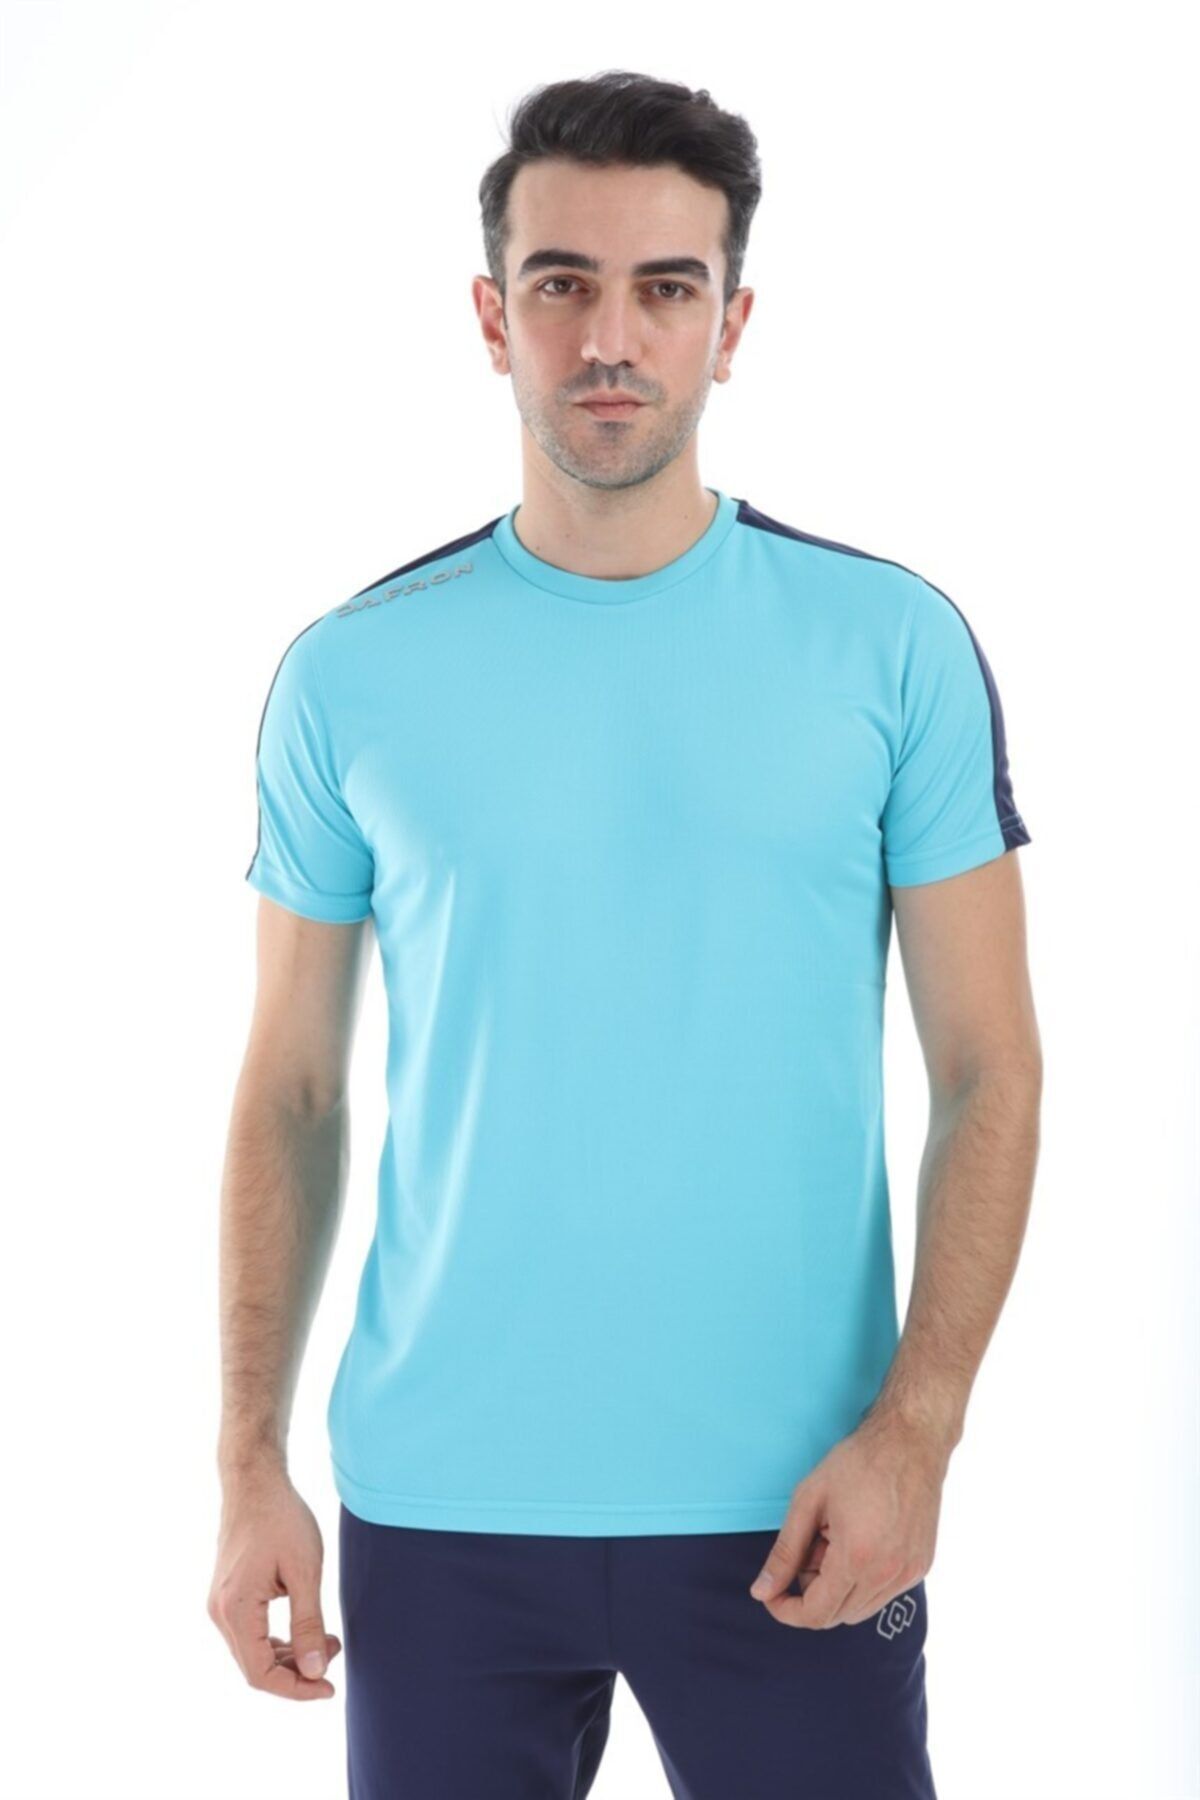 Dafron ErkekTurkuaz Star Basic Antrenman T-shirt